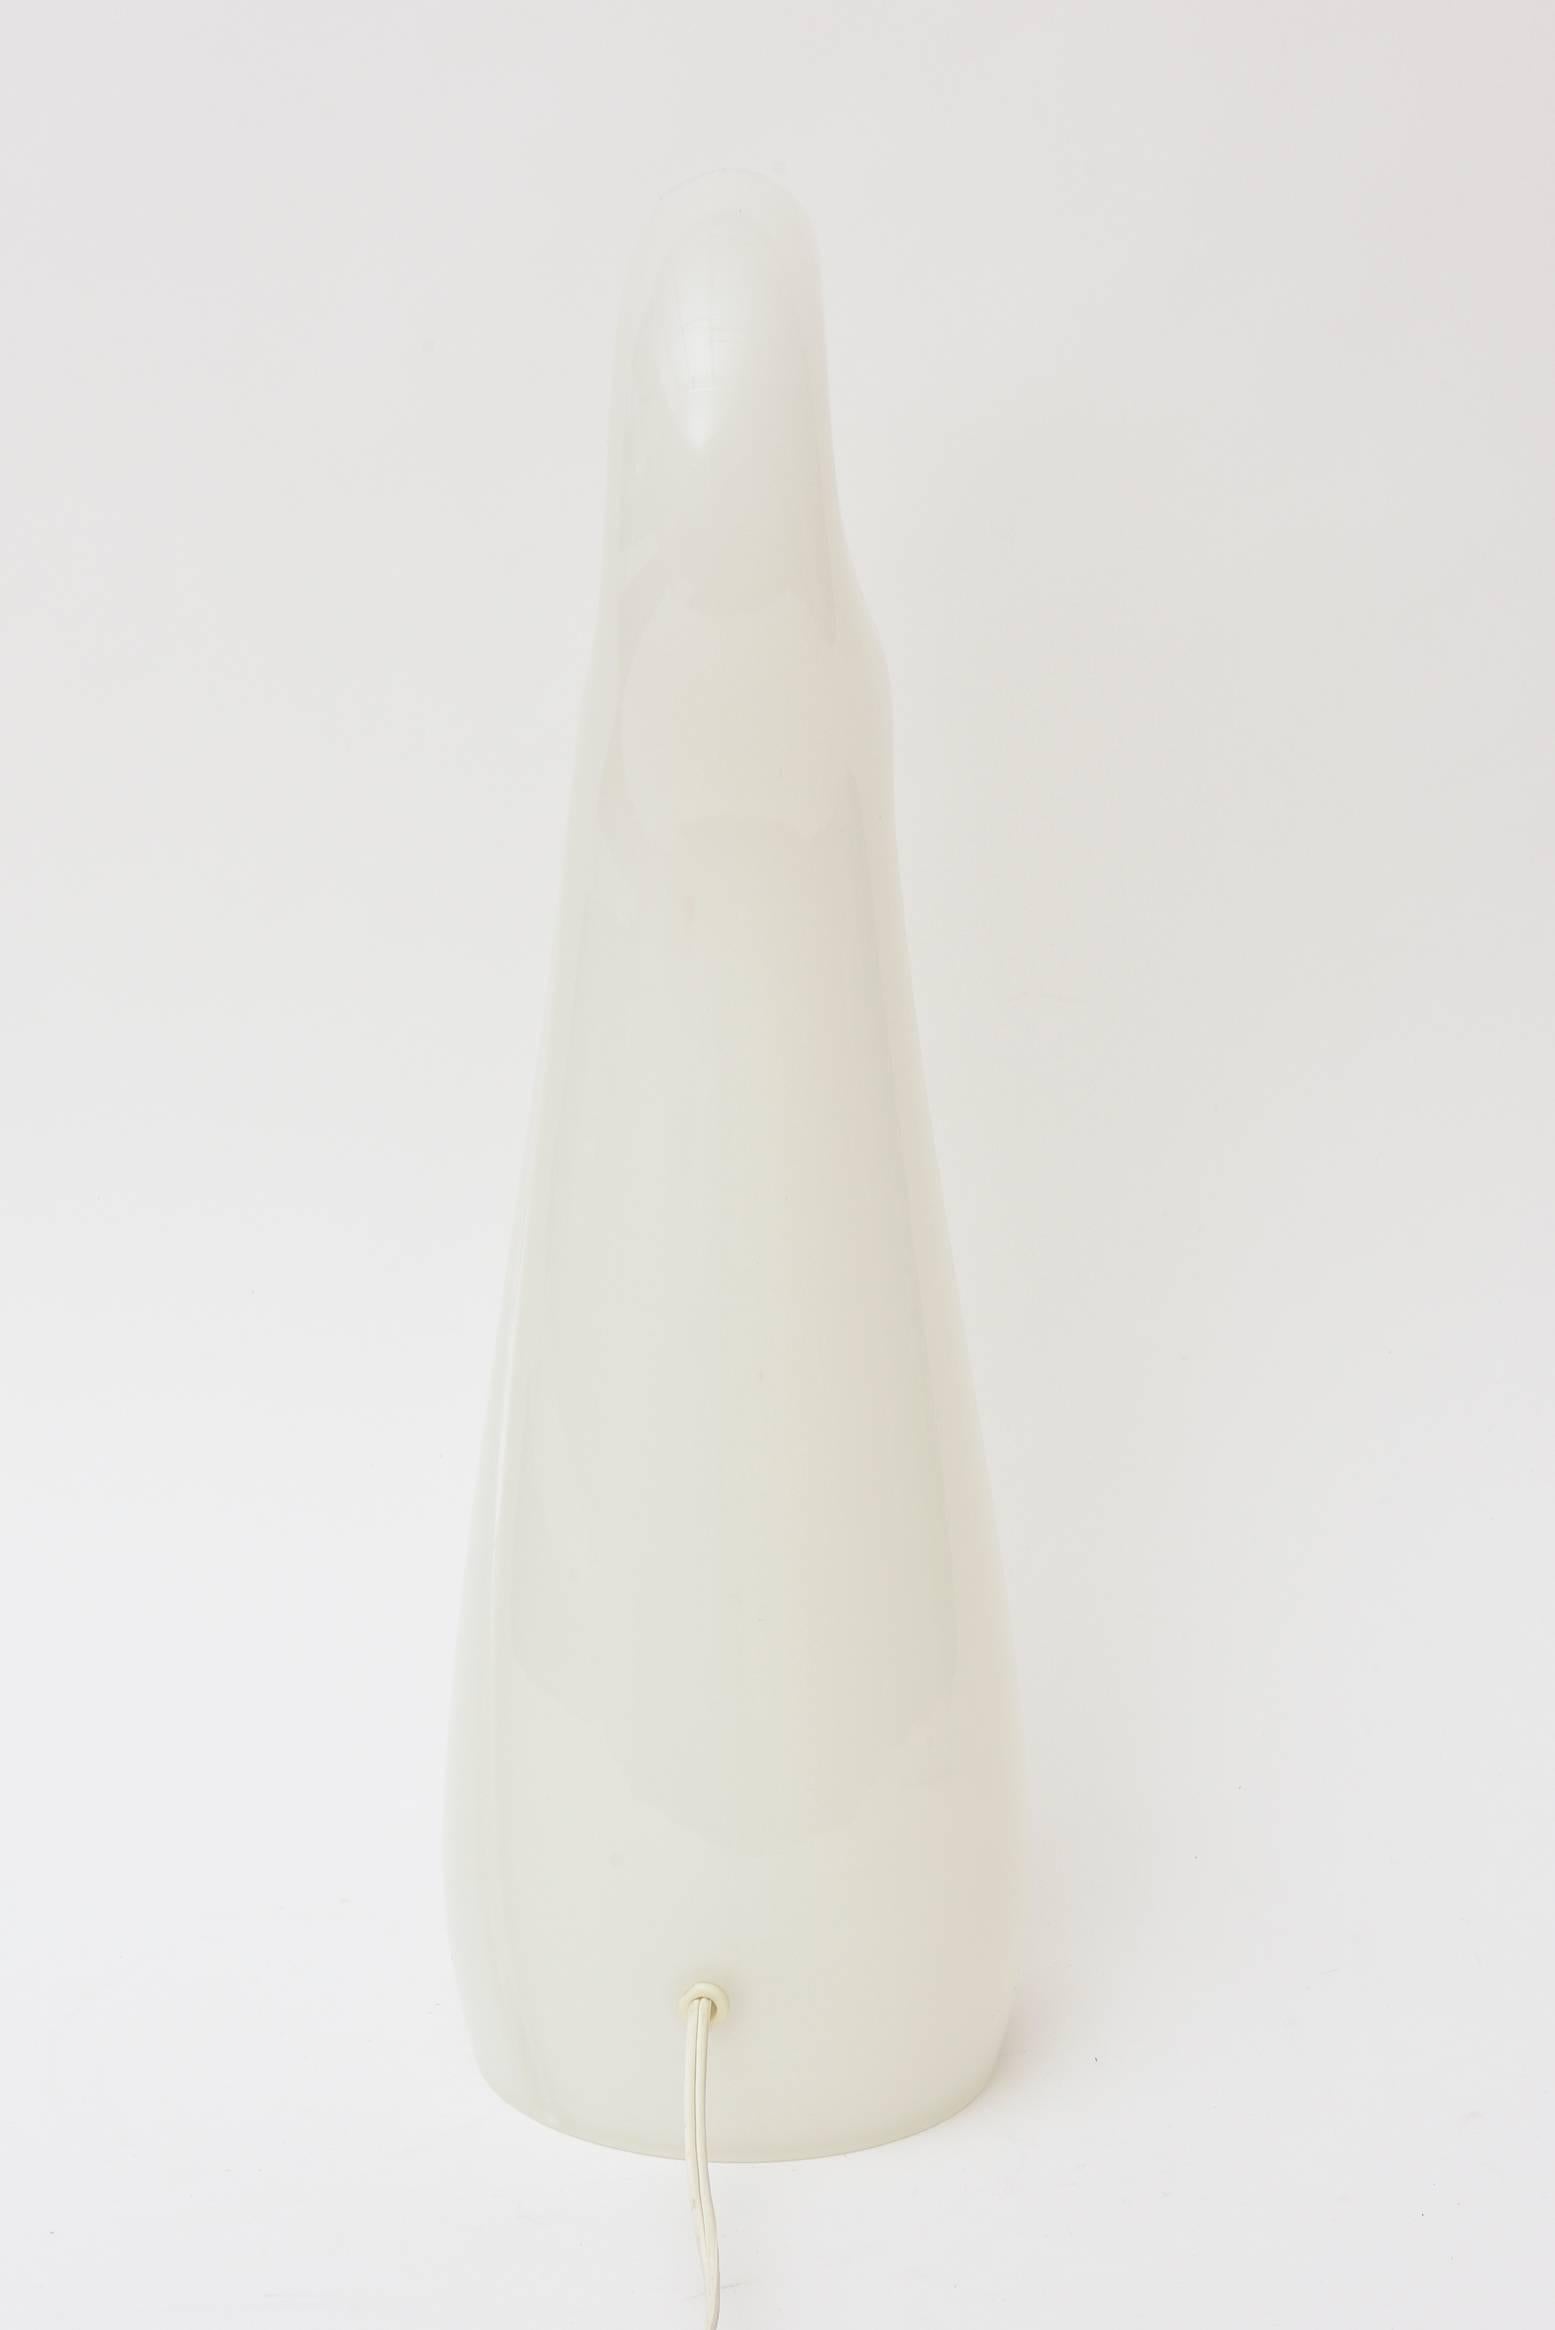 Vistosi Murano Glass Lamp Vintage 1